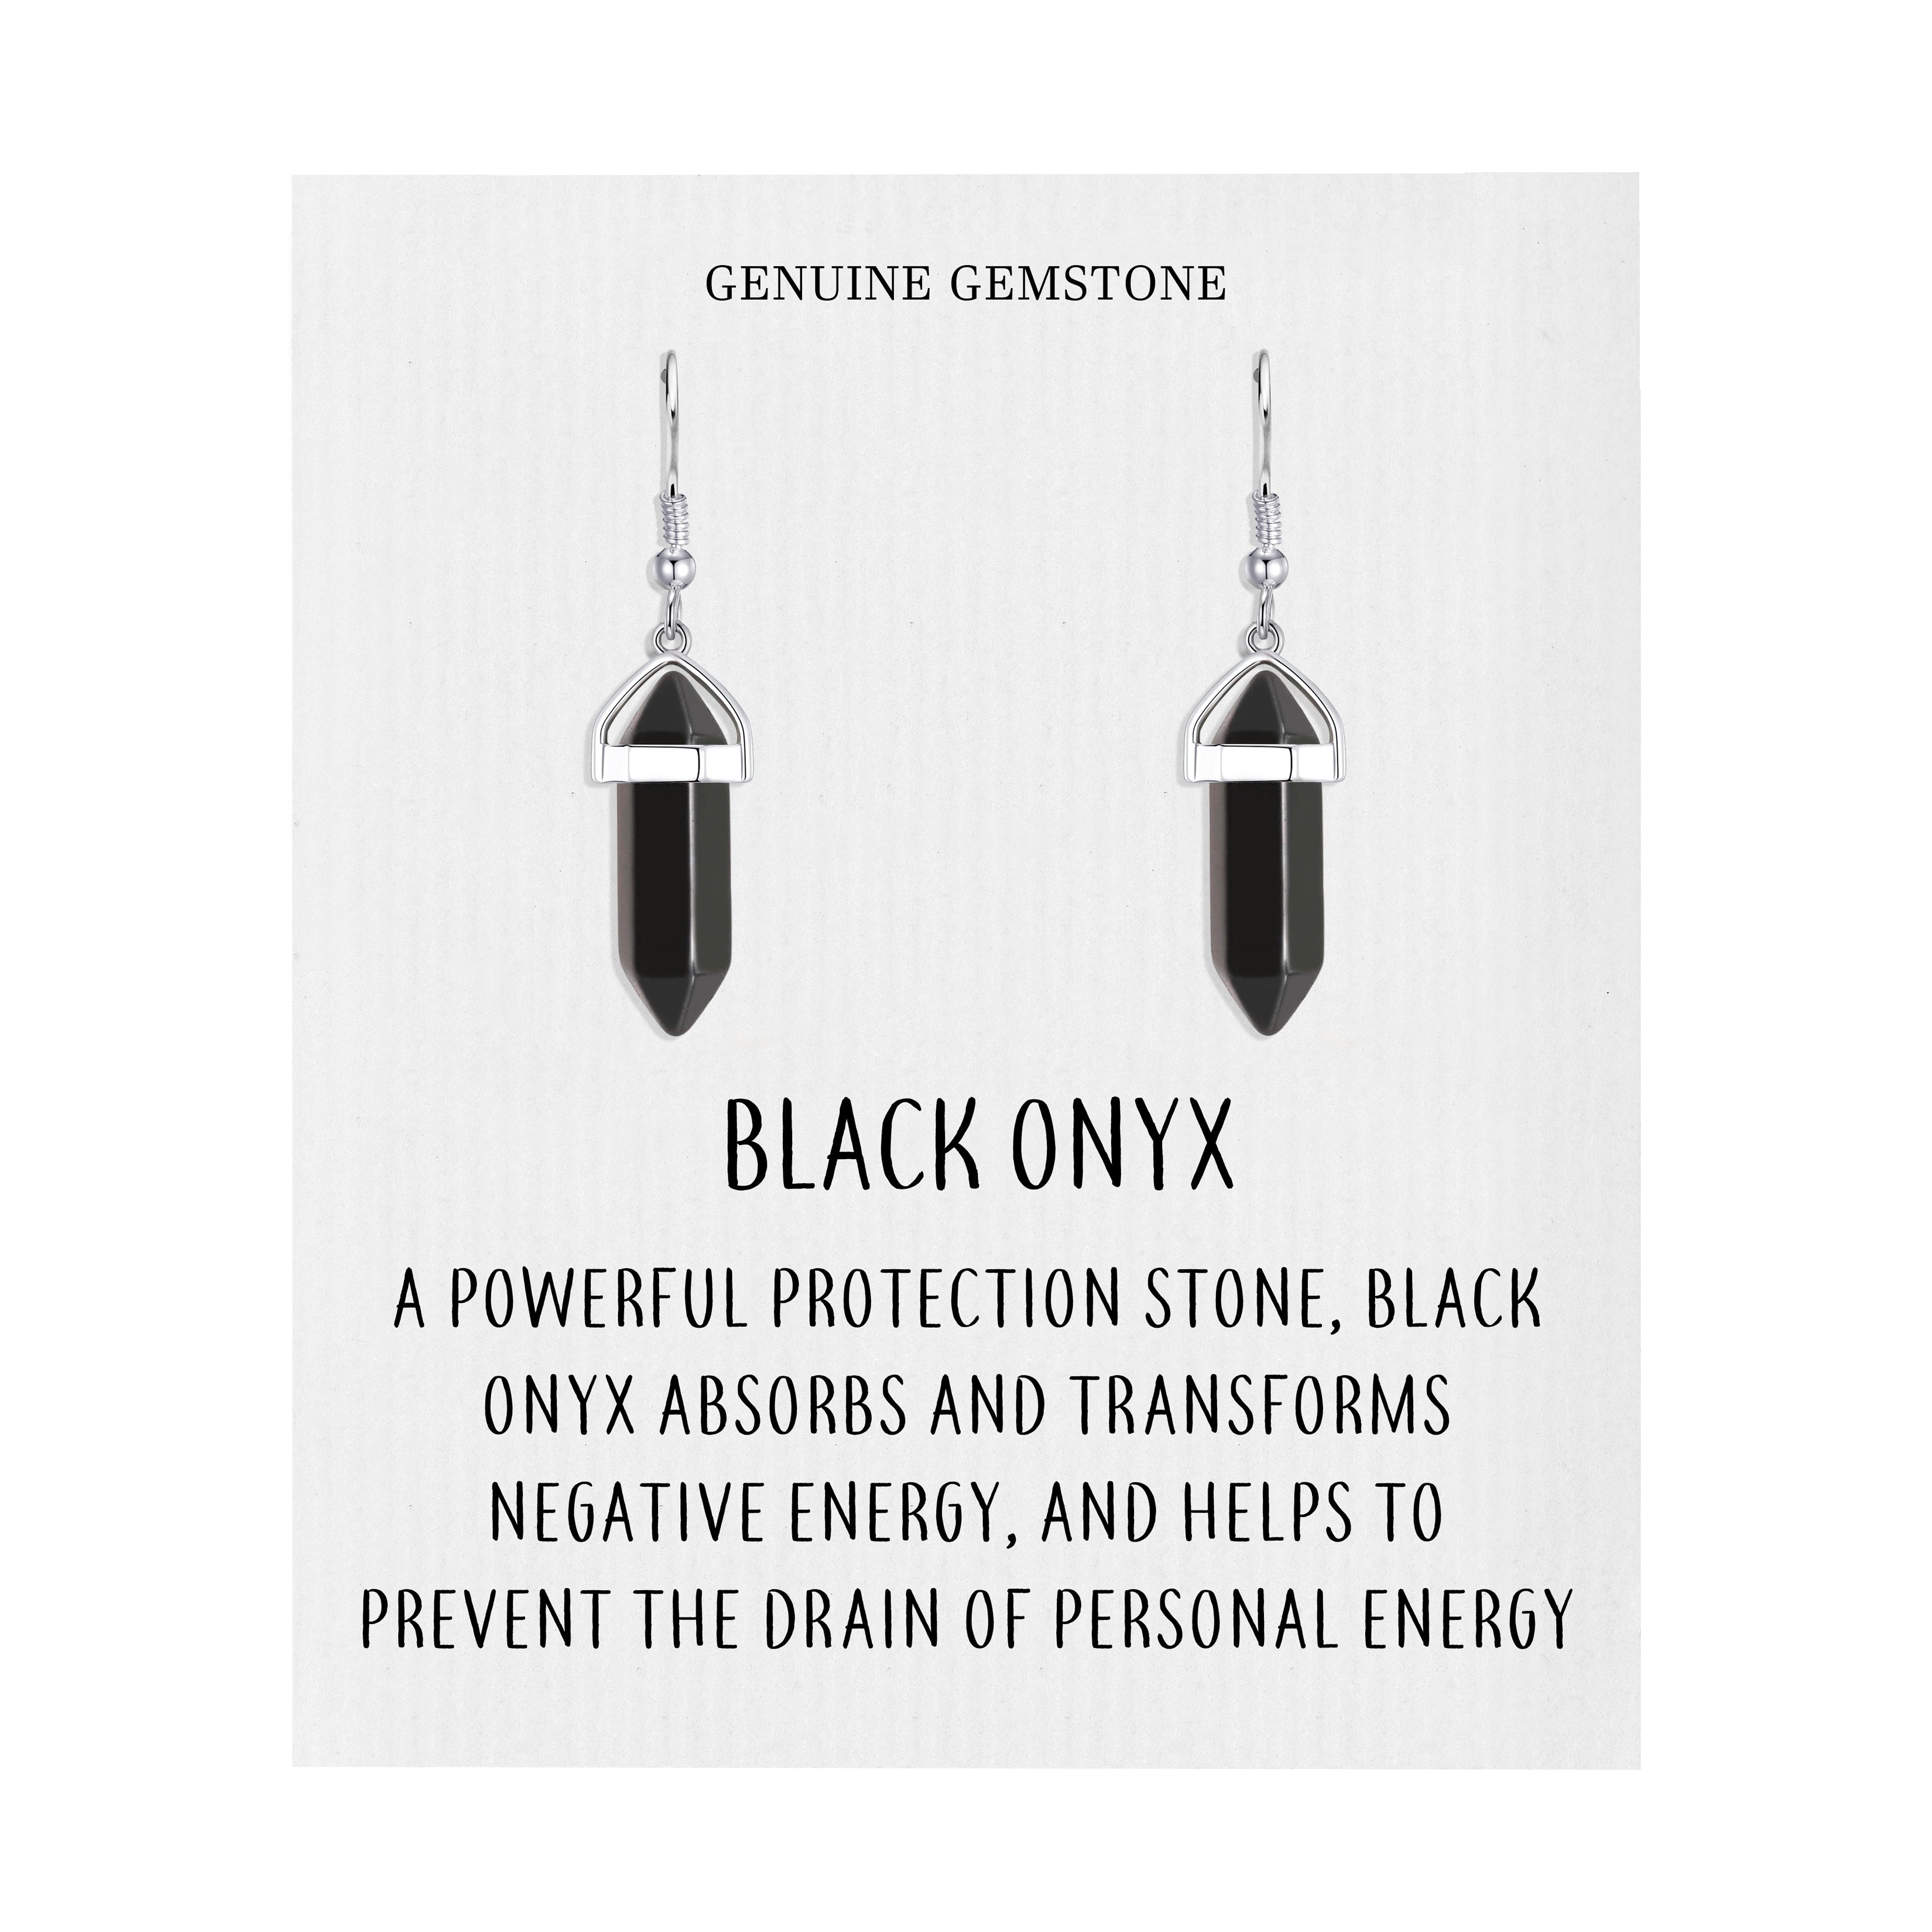 Black Onyx Gemstone Drop Earrings with Quote Card by Philip Jones Jewellery